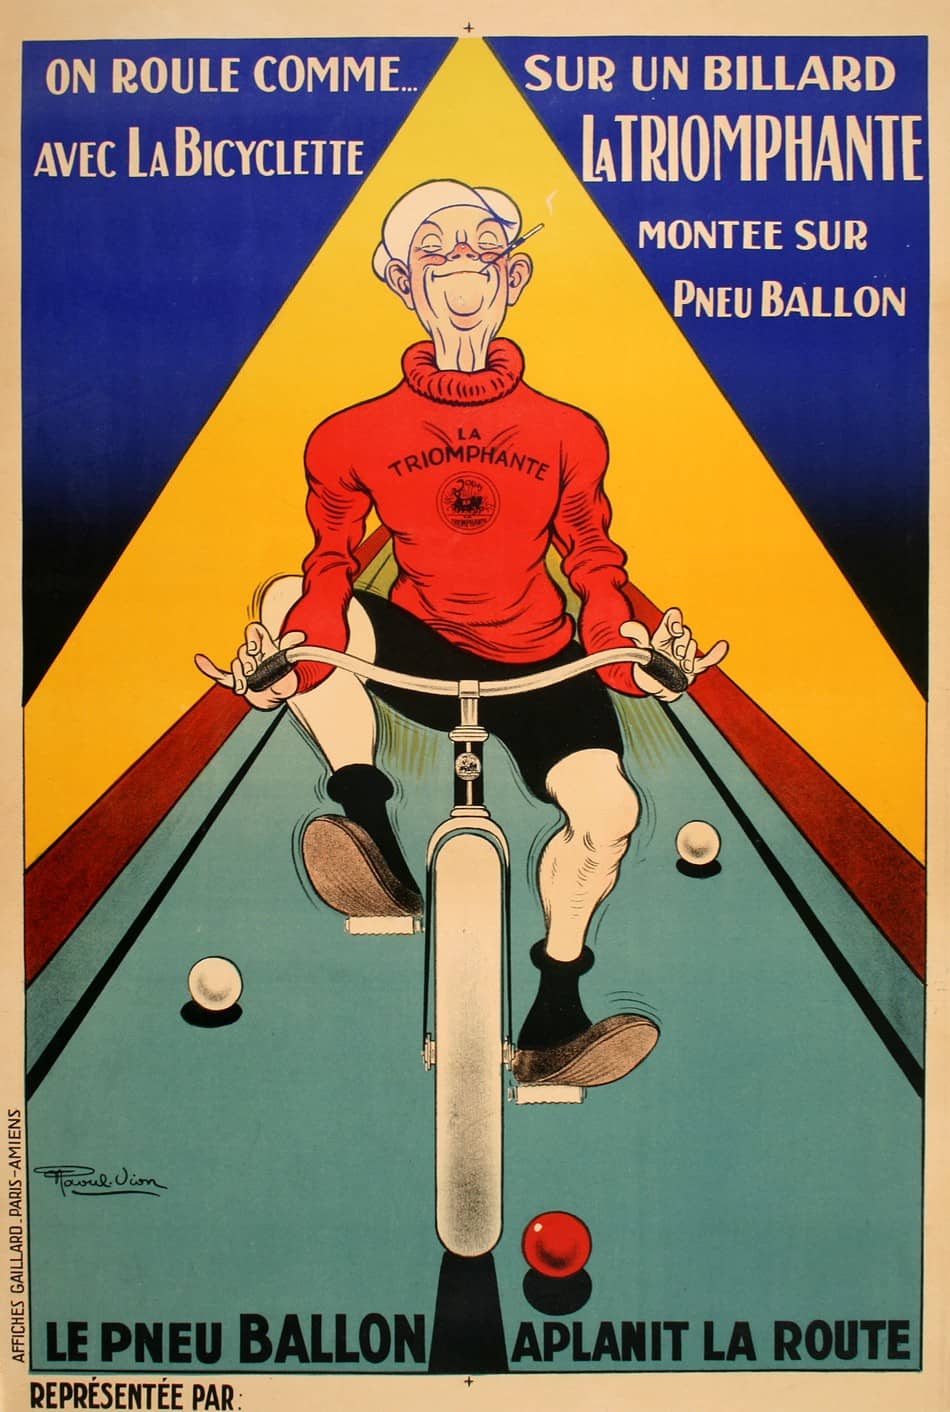 Original Vintage Bicycle Tire Poster La Triomphante by Vion 1920 Cycling